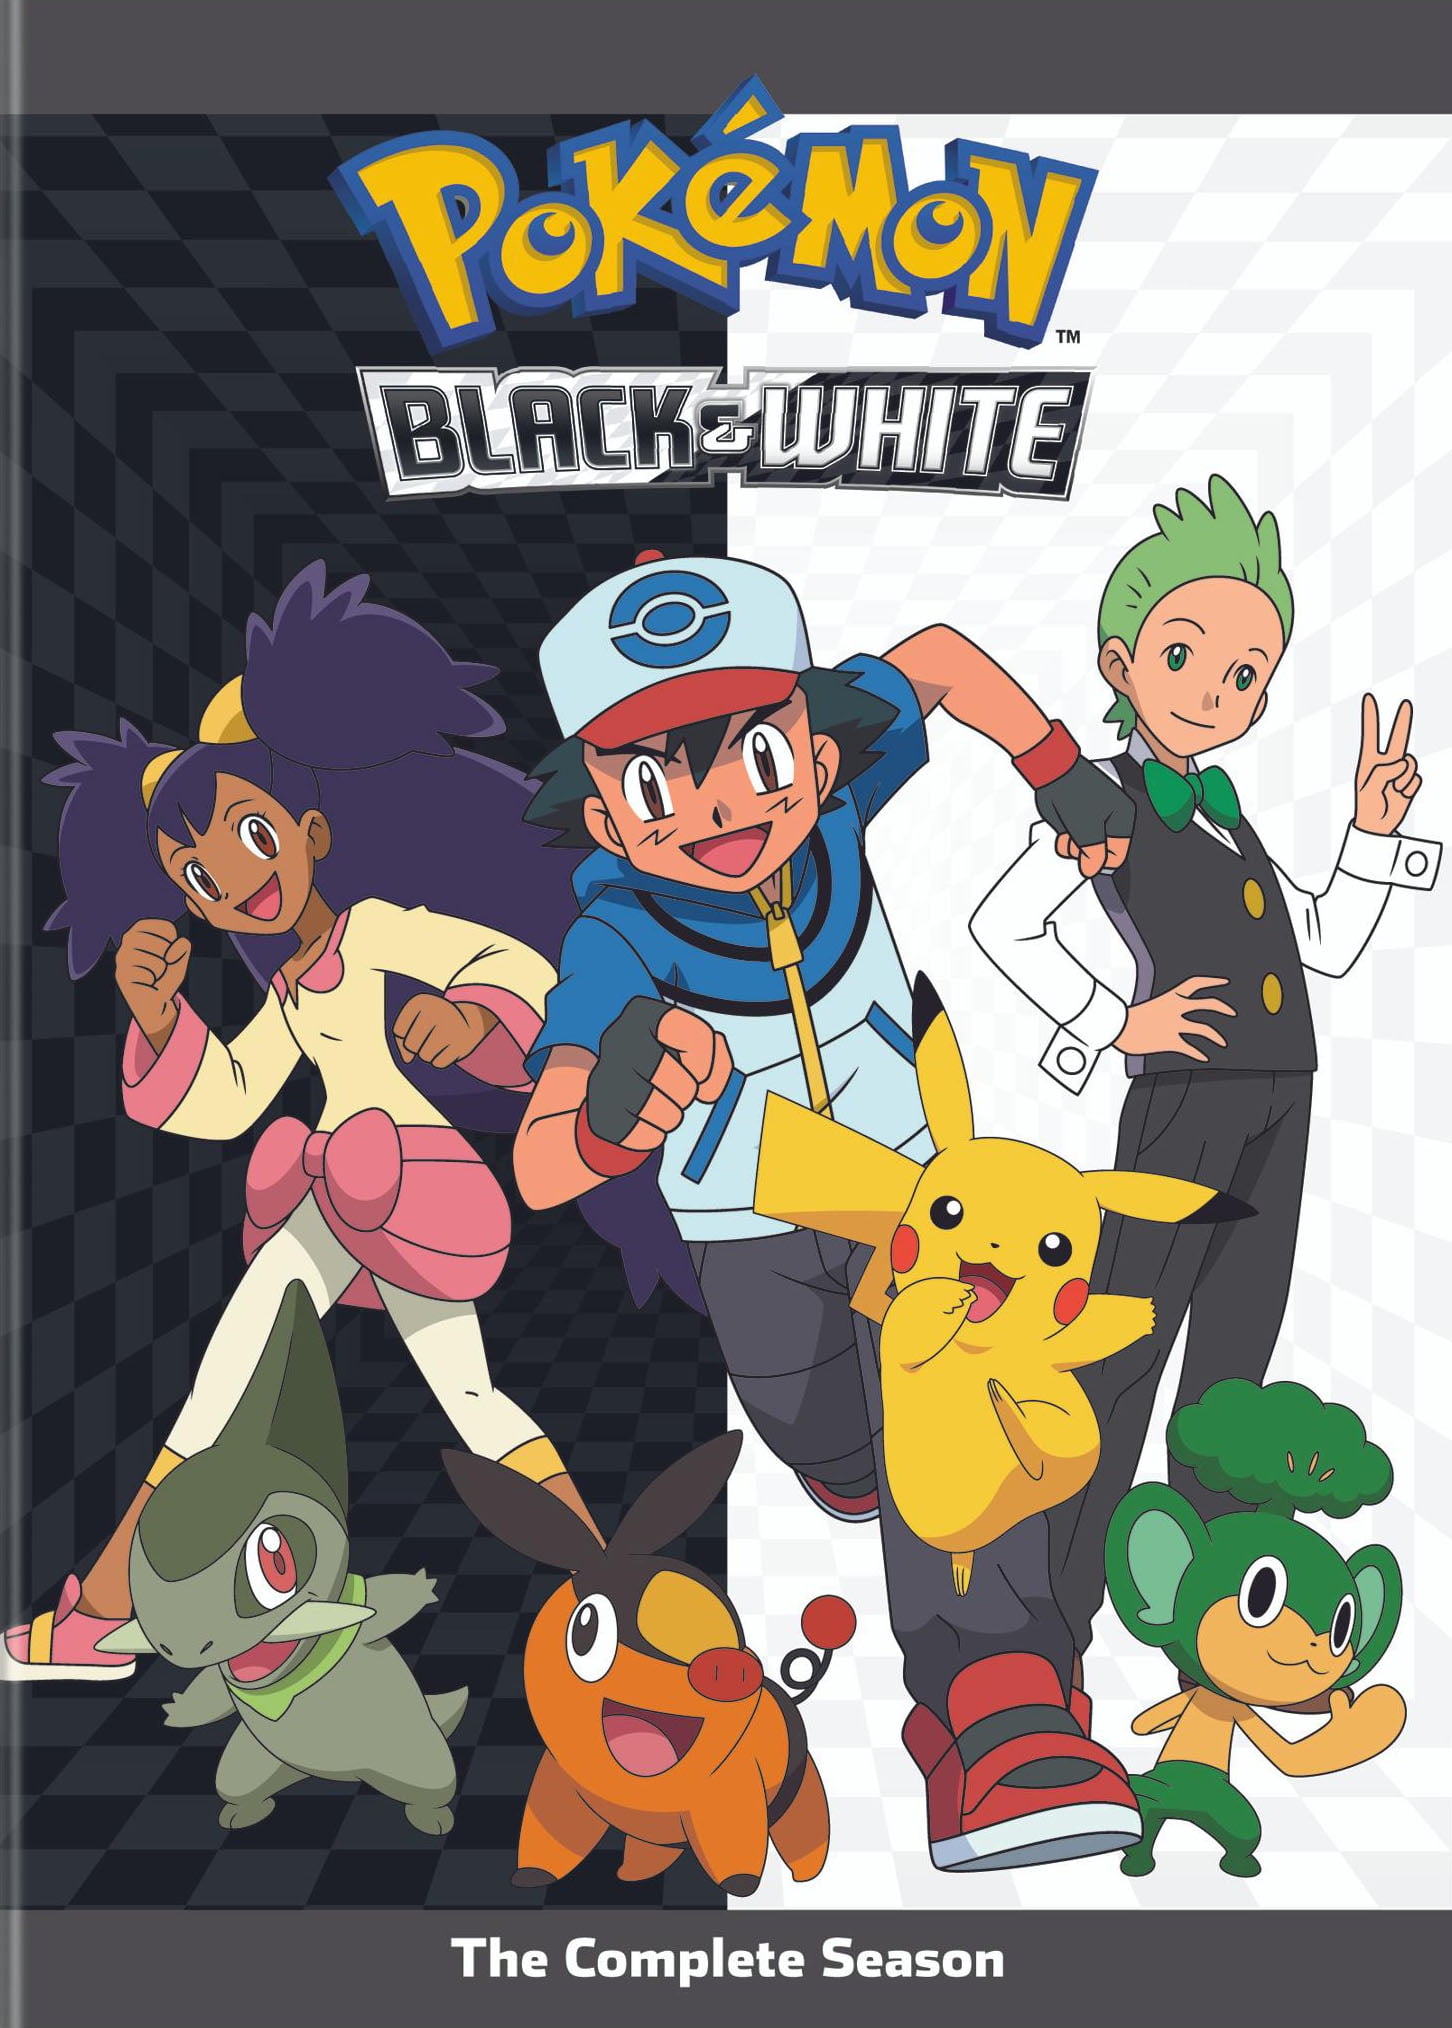 Pokemon Movie 14-16 Collection: Black & White Review • Anime UK News